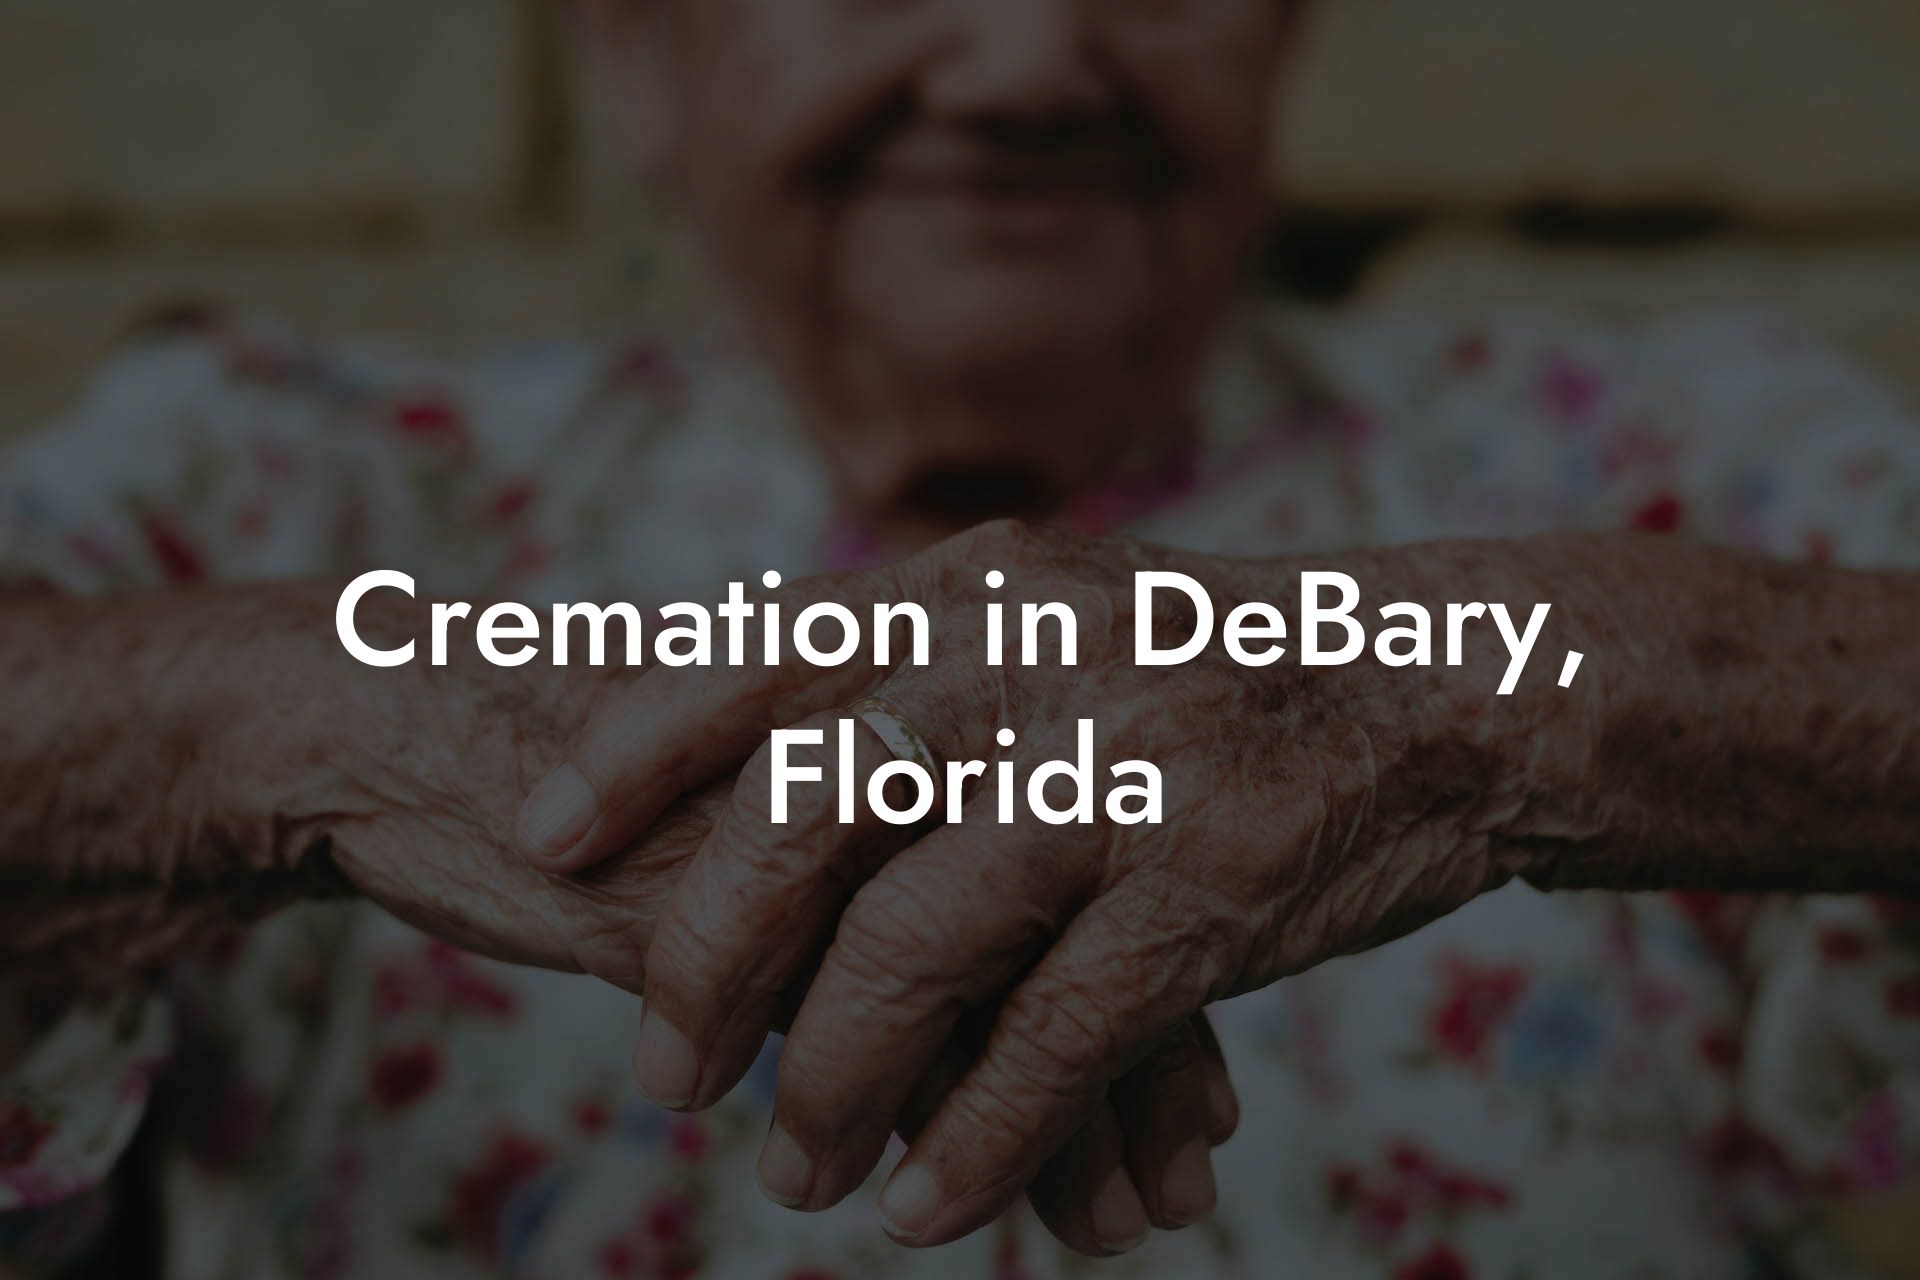 Cremation in DeBary, Florida